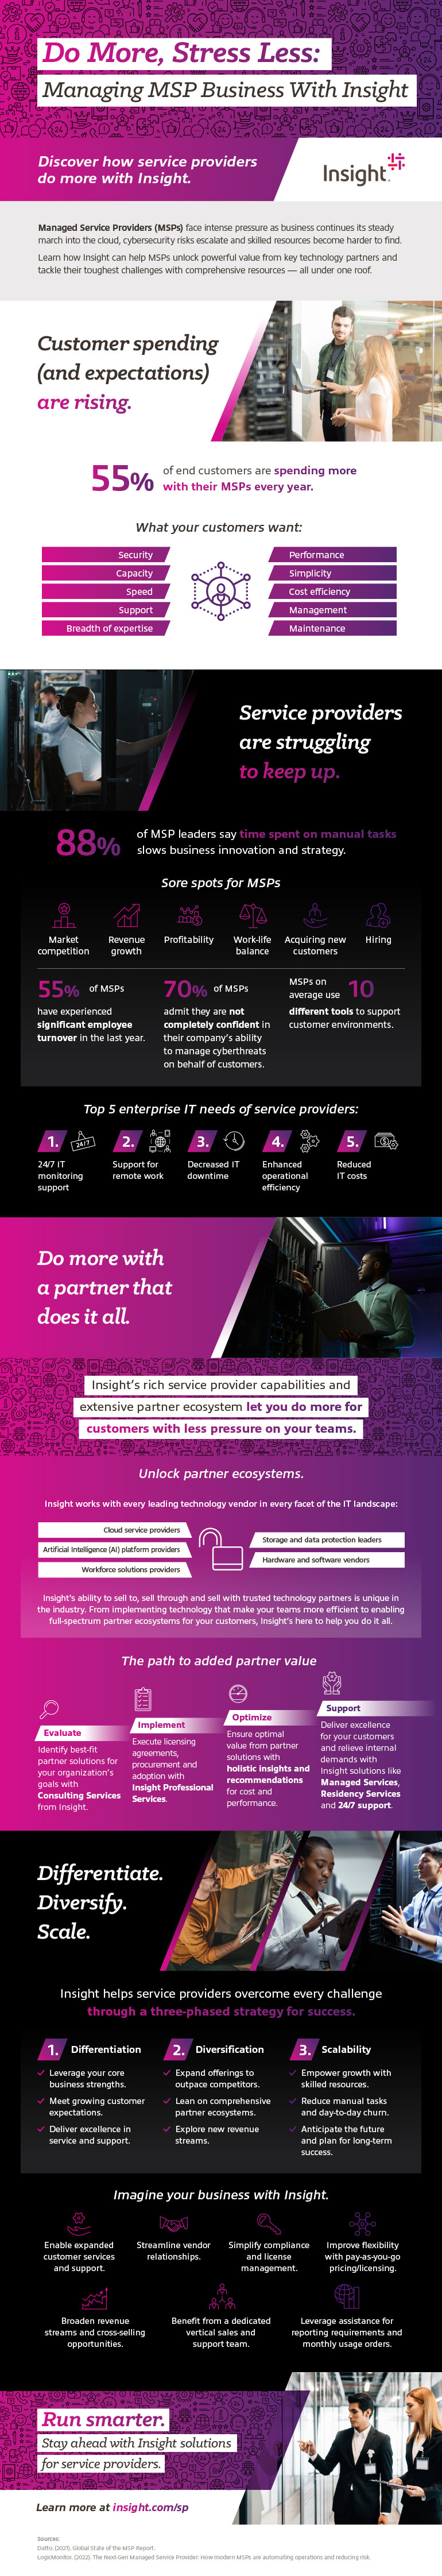 Service provider infographic